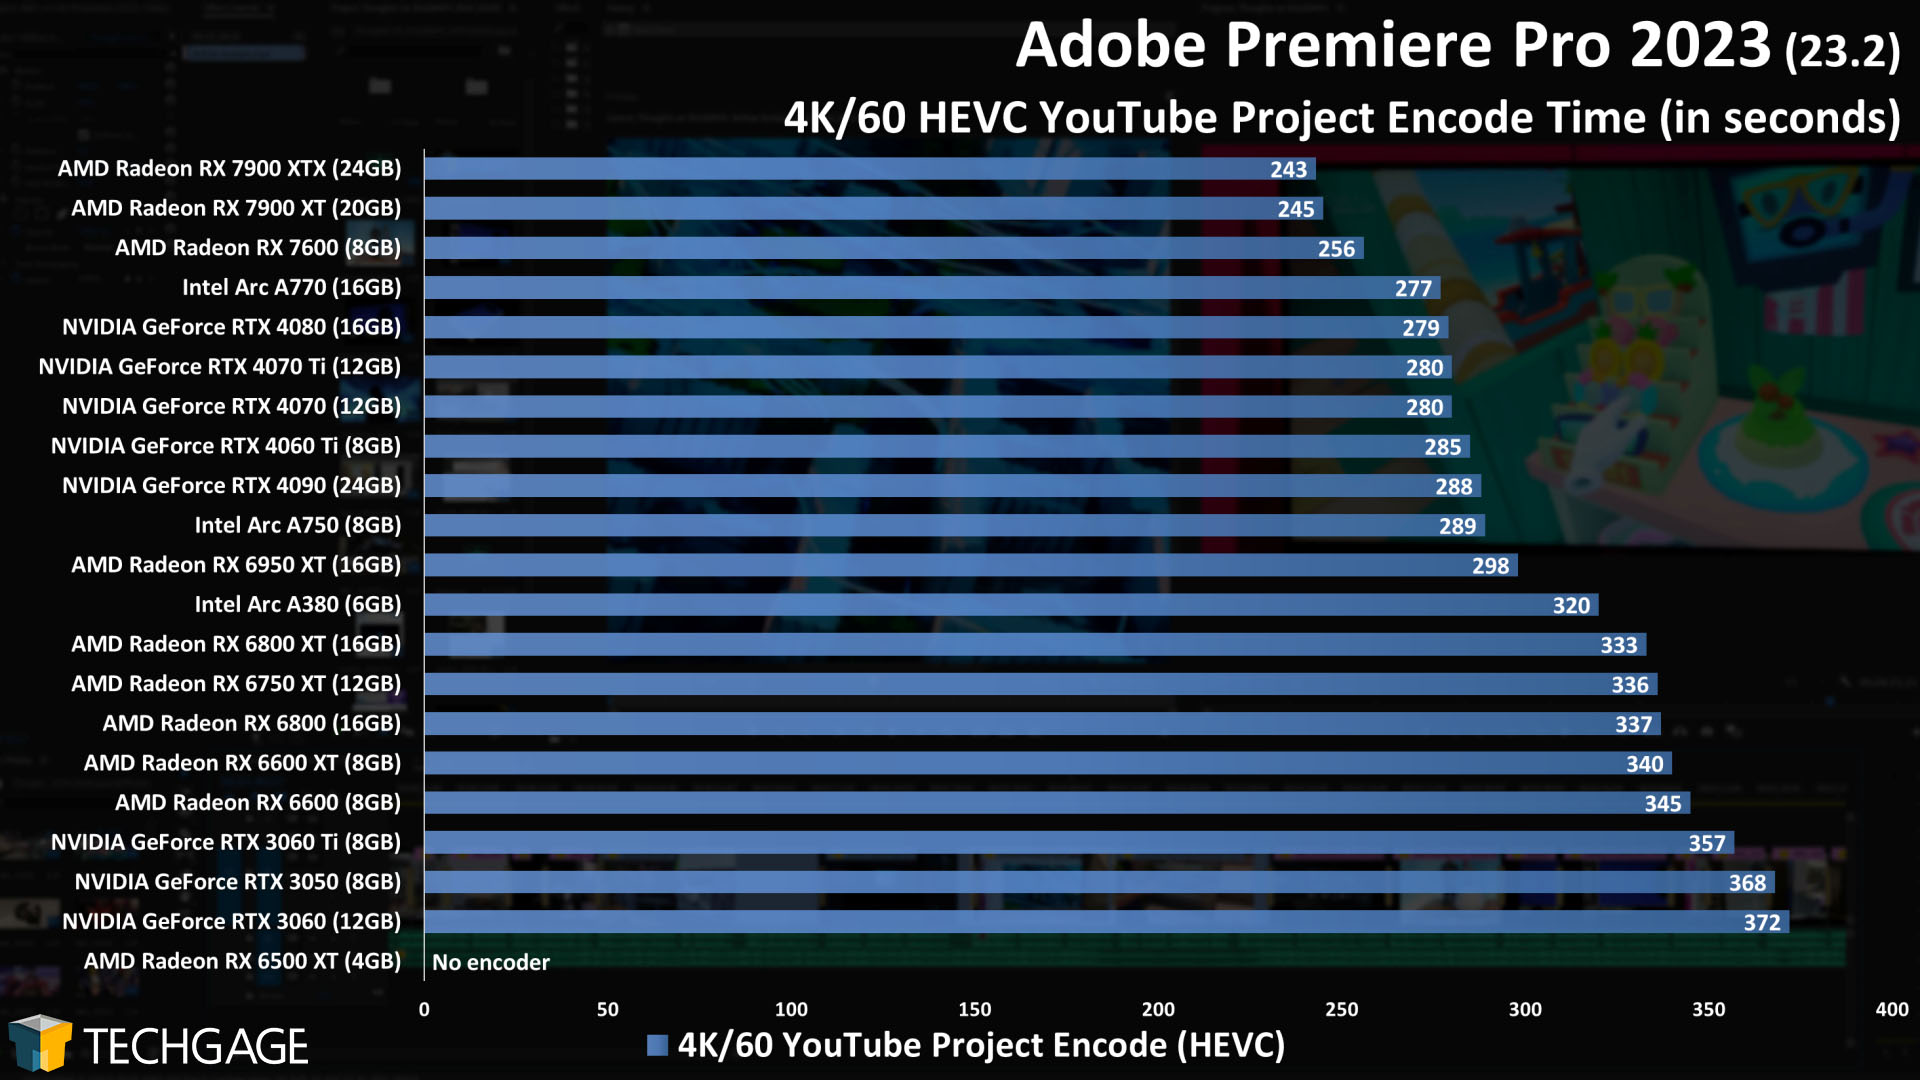 Adobe Premiere Pro - GPU Encoding Performance (4K60 YouTube Project)